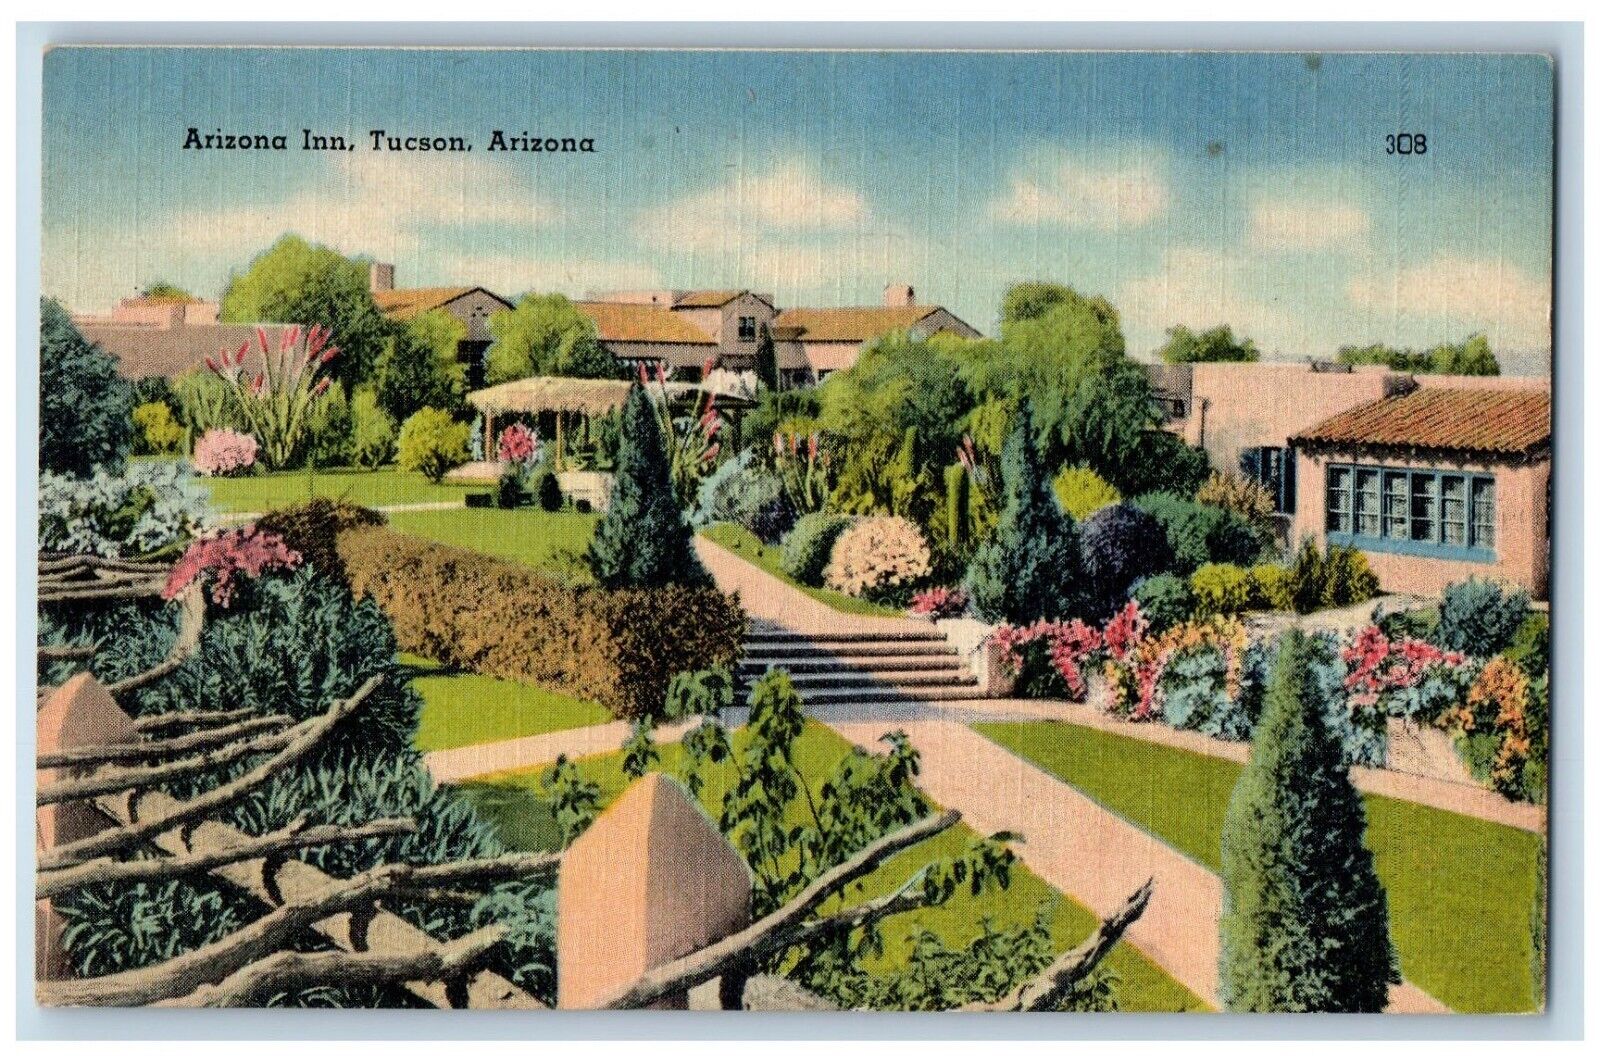 Tucson Arizona Postcard Arizona Inn Exterior House Field c1940 Vintage Antique